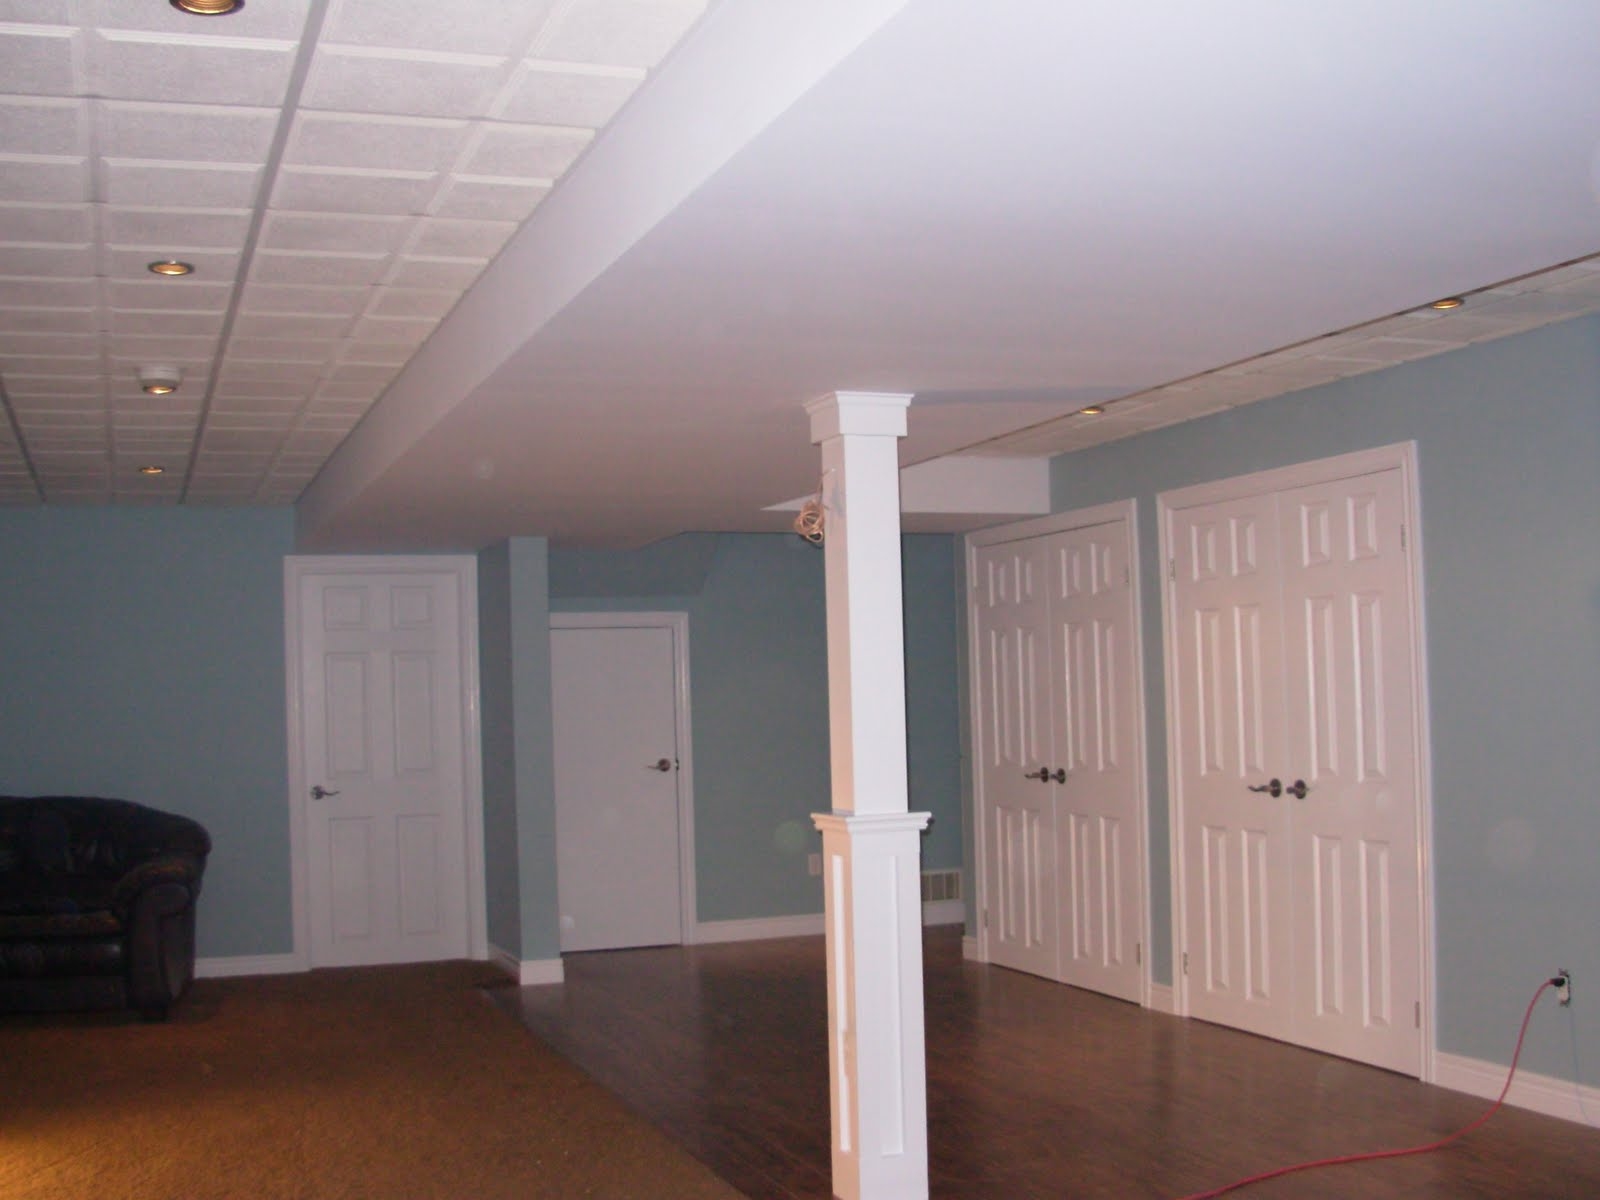 Ceiling Tiles Basements Optionsfresh basement ceiling material options 20928